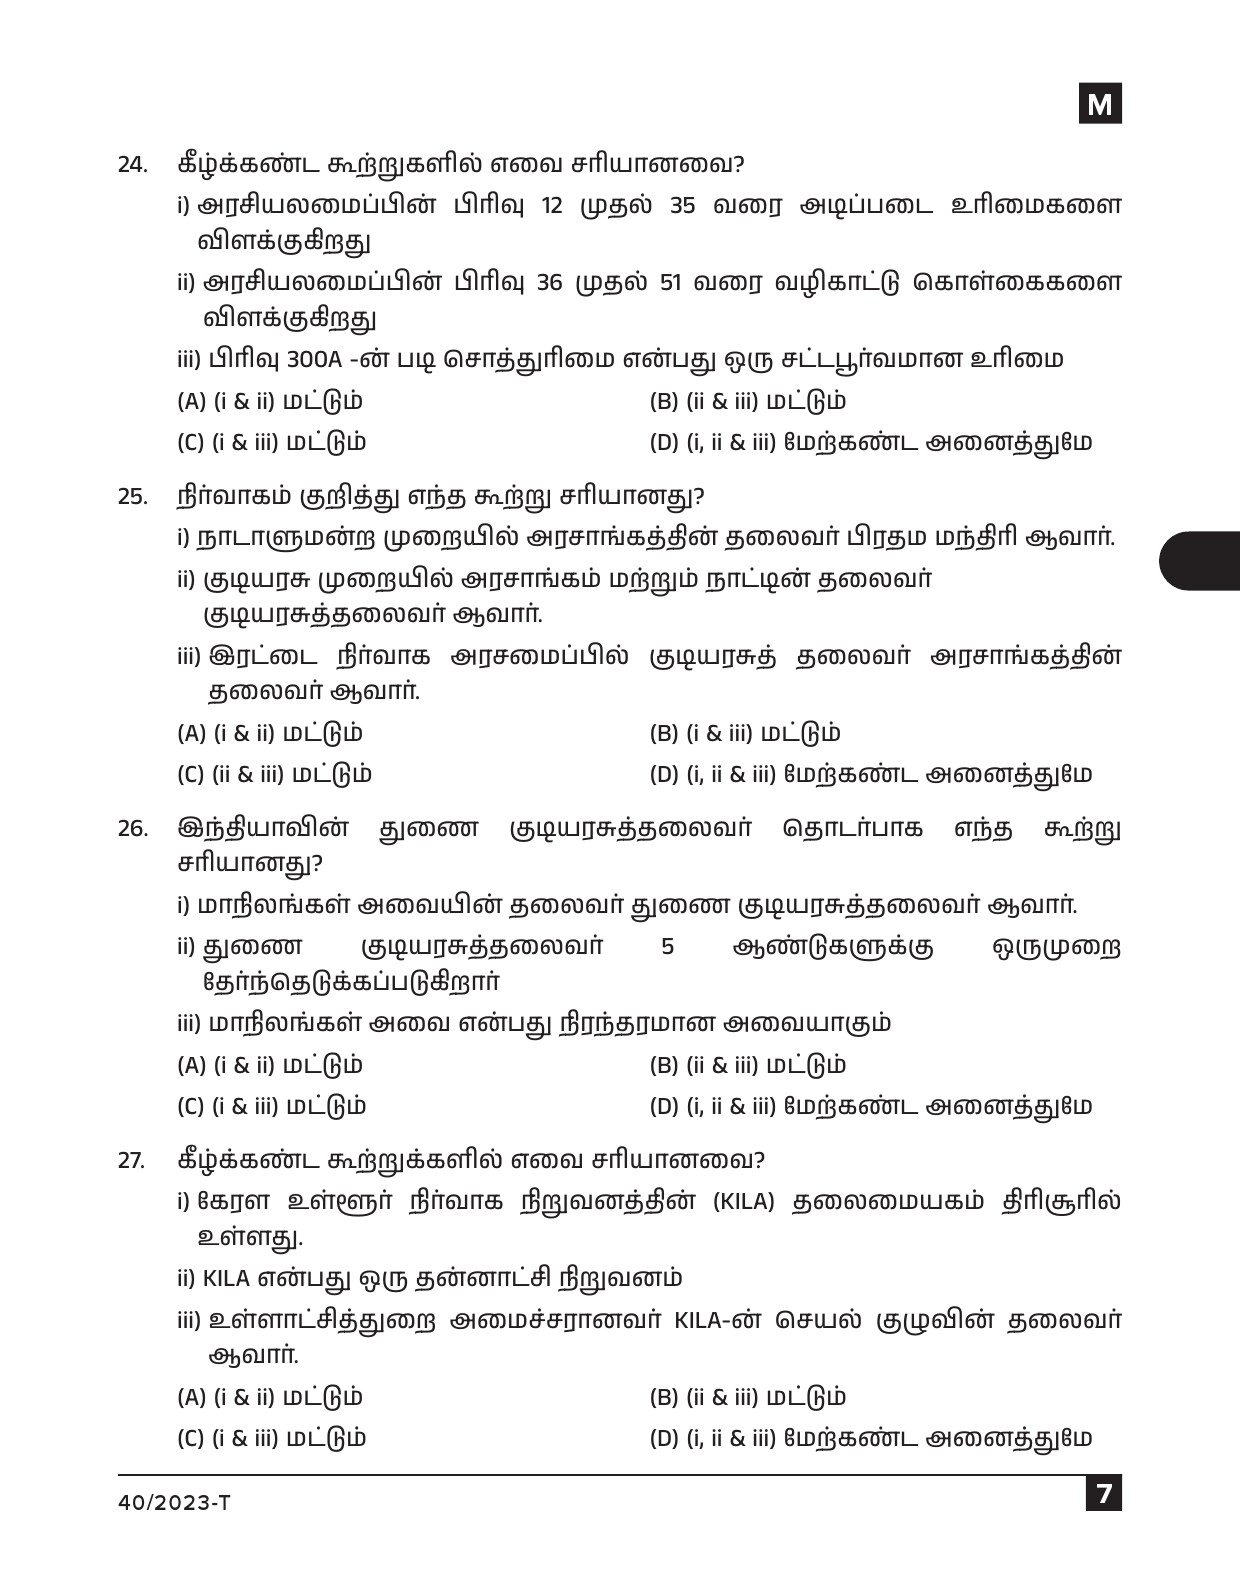 KPSC Data Entry Operator Tamil Exam 2023 Code 0402023 T 6